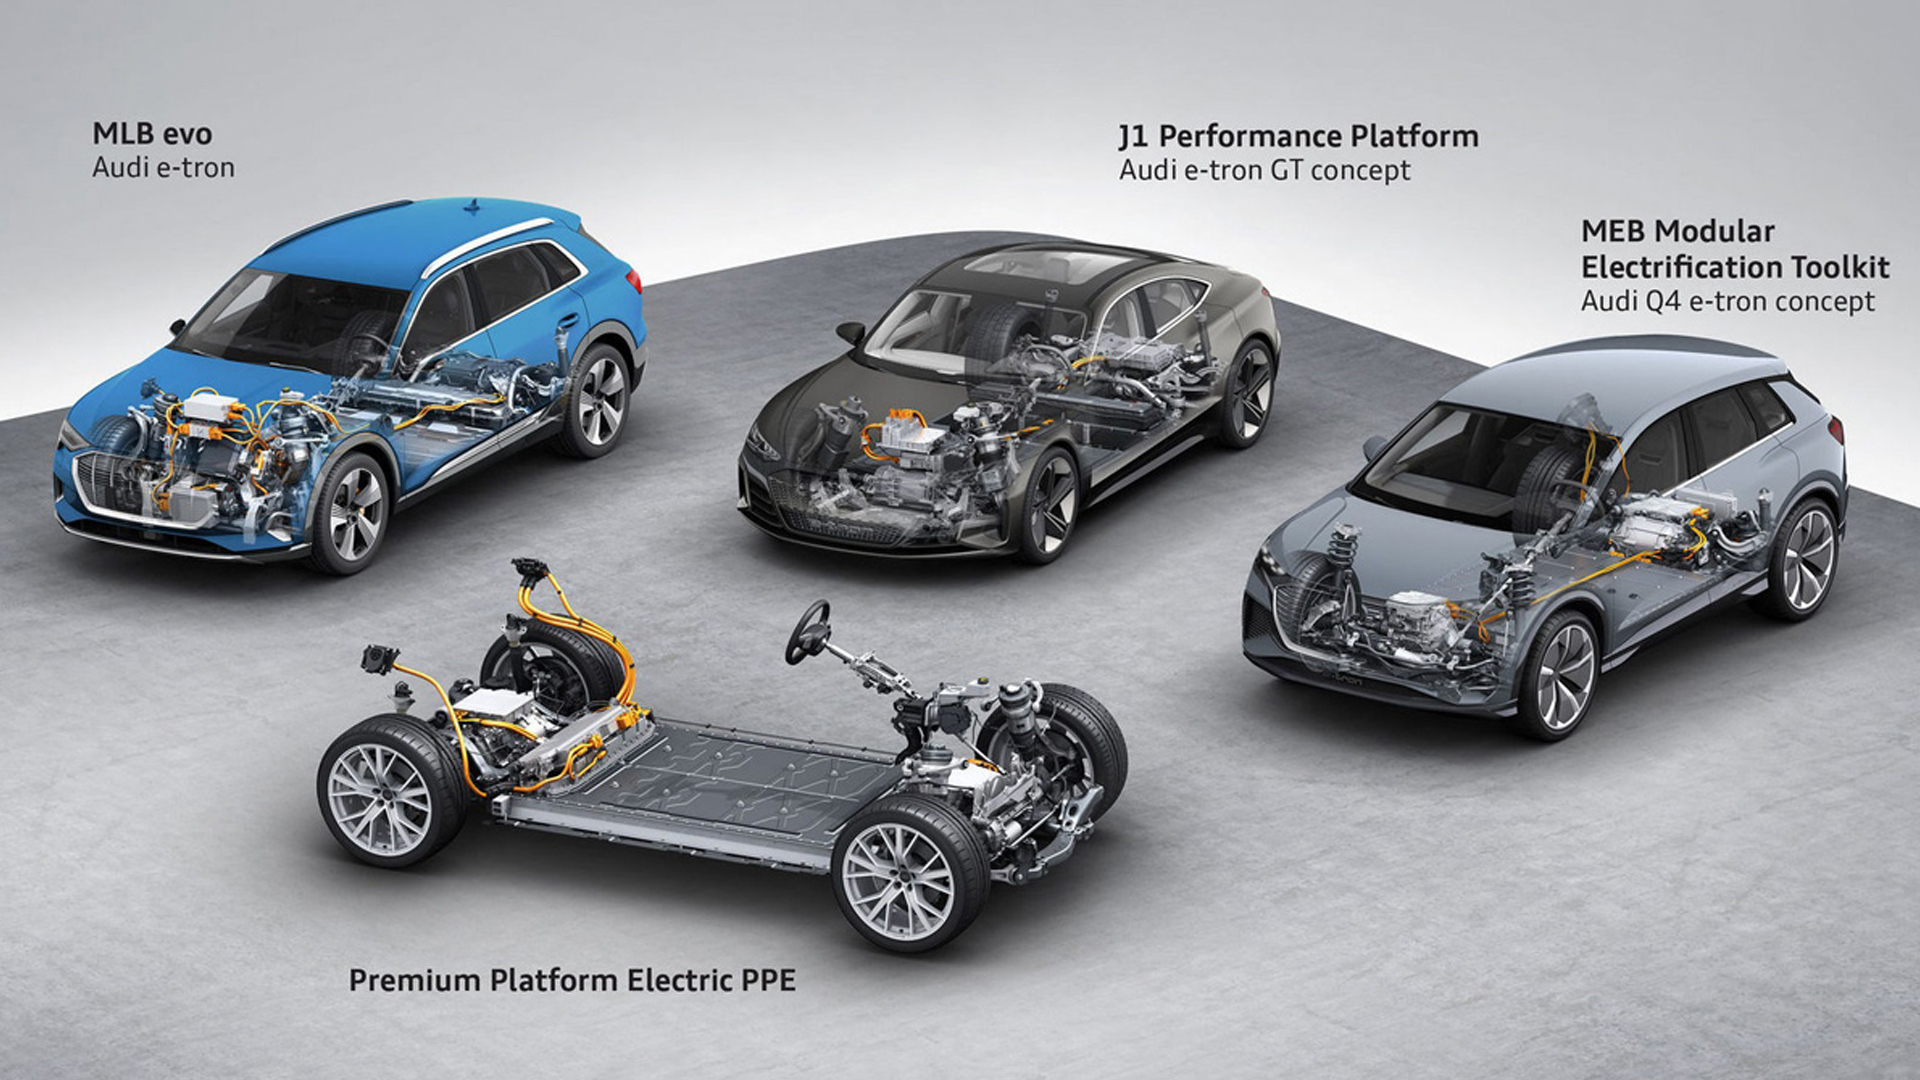 Audi electric platform model range